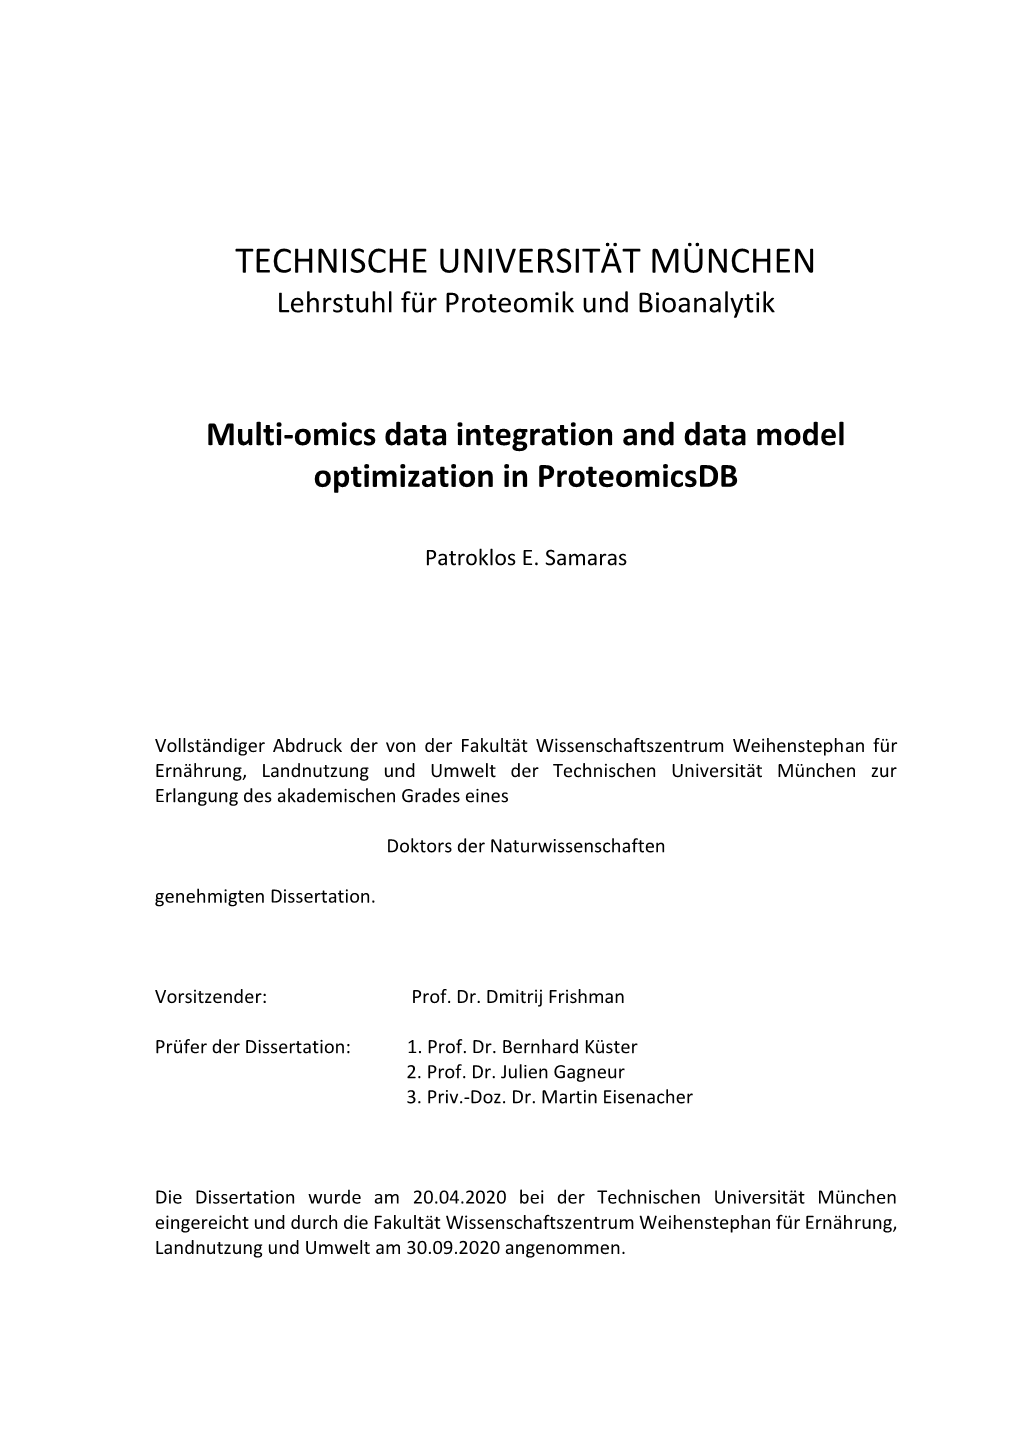 Multi-Omics Data Integration and Data Model Optimization in Proteomicsdb